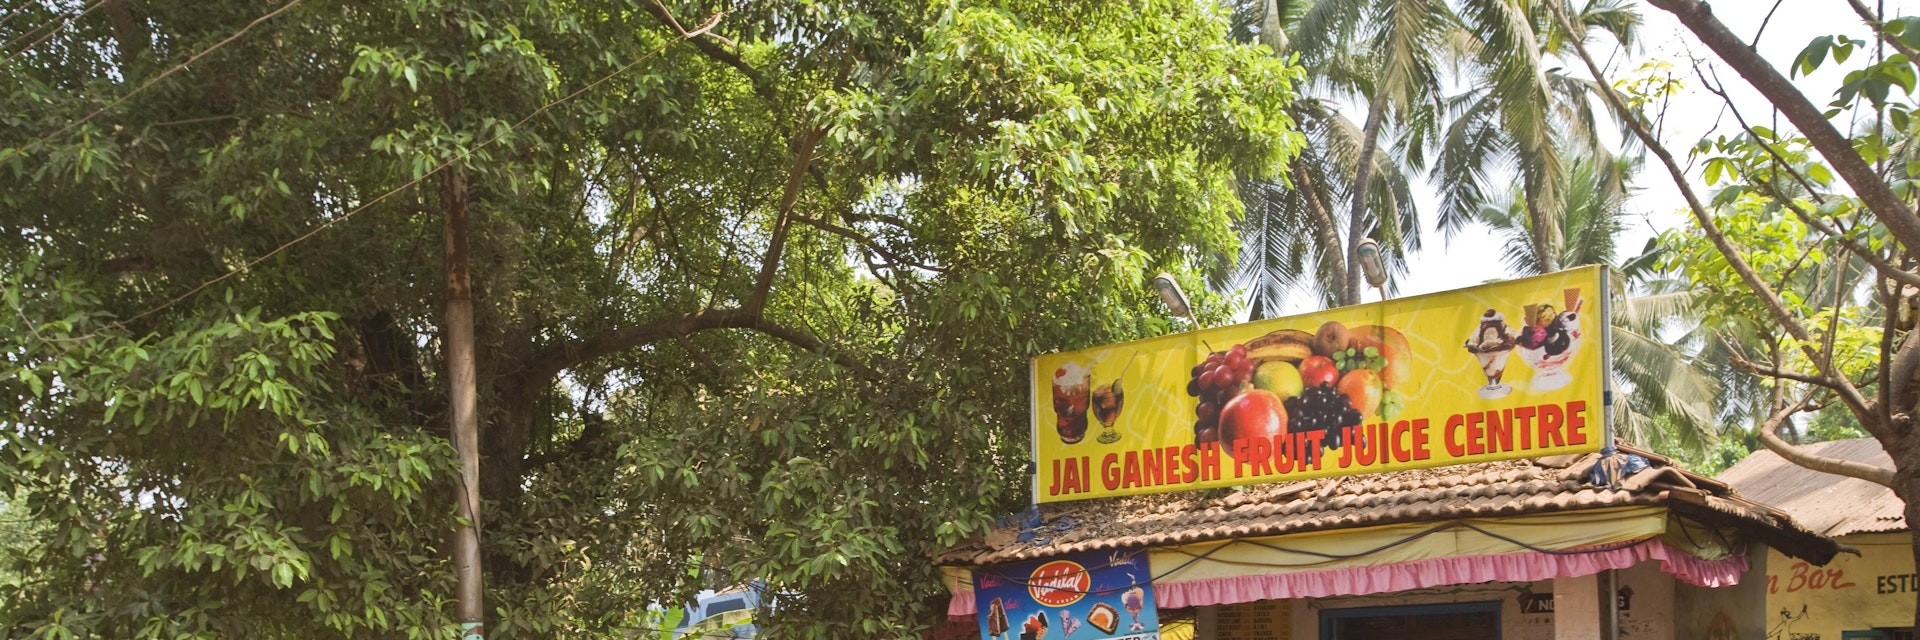 Jai Ganesh Fruit Juice Centre.